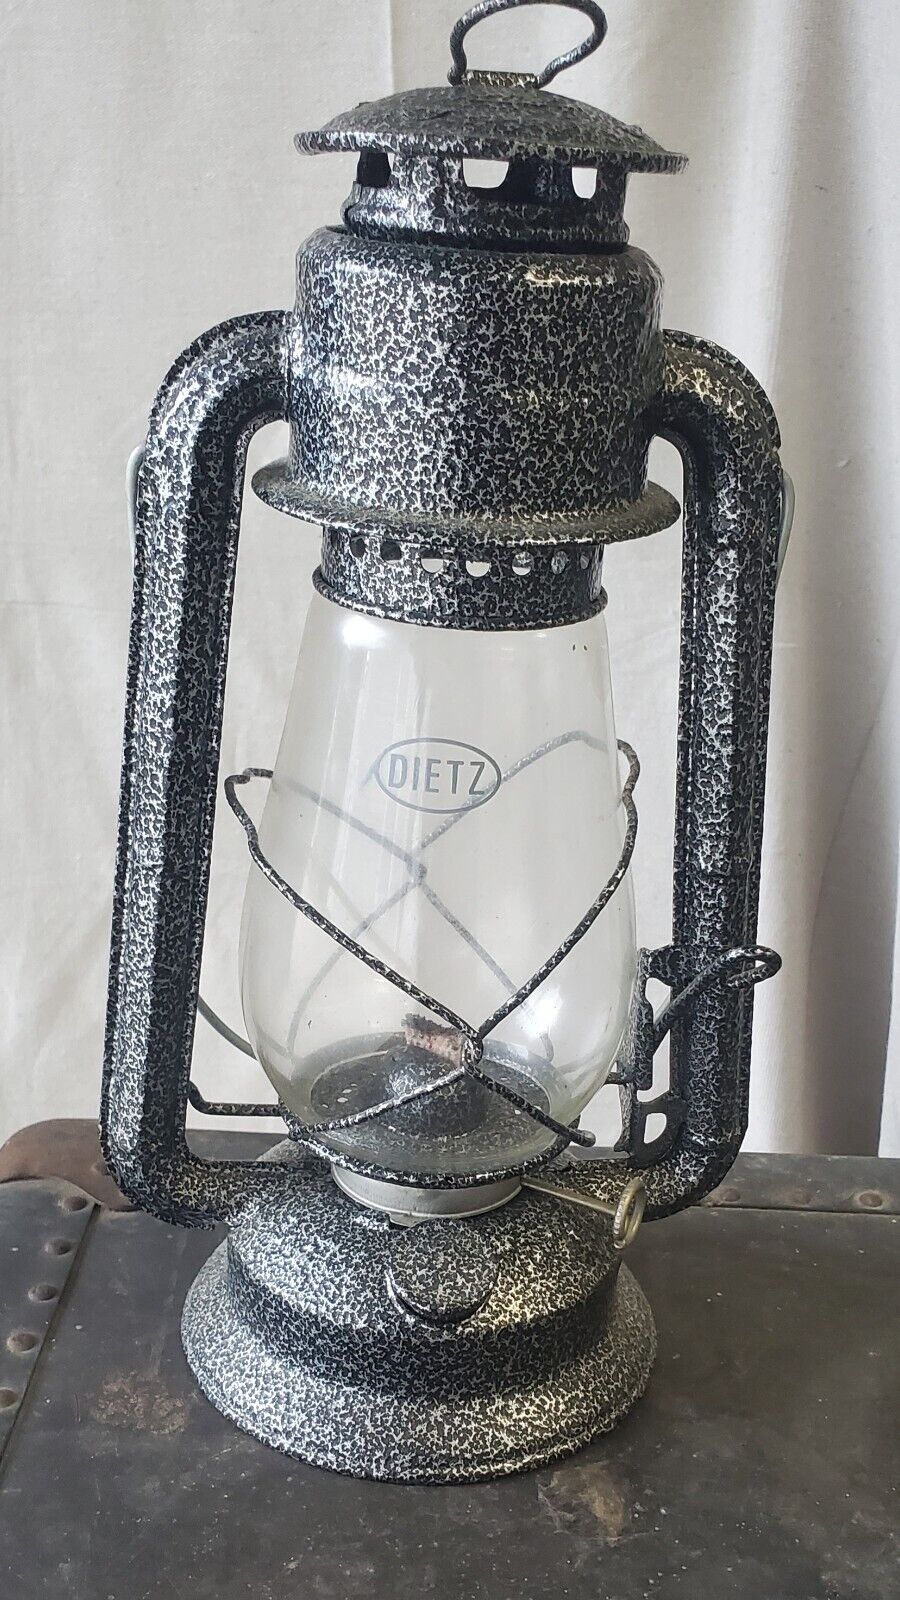 Vintage Dietz Kerosene Lantern Crackled Black and Silverc